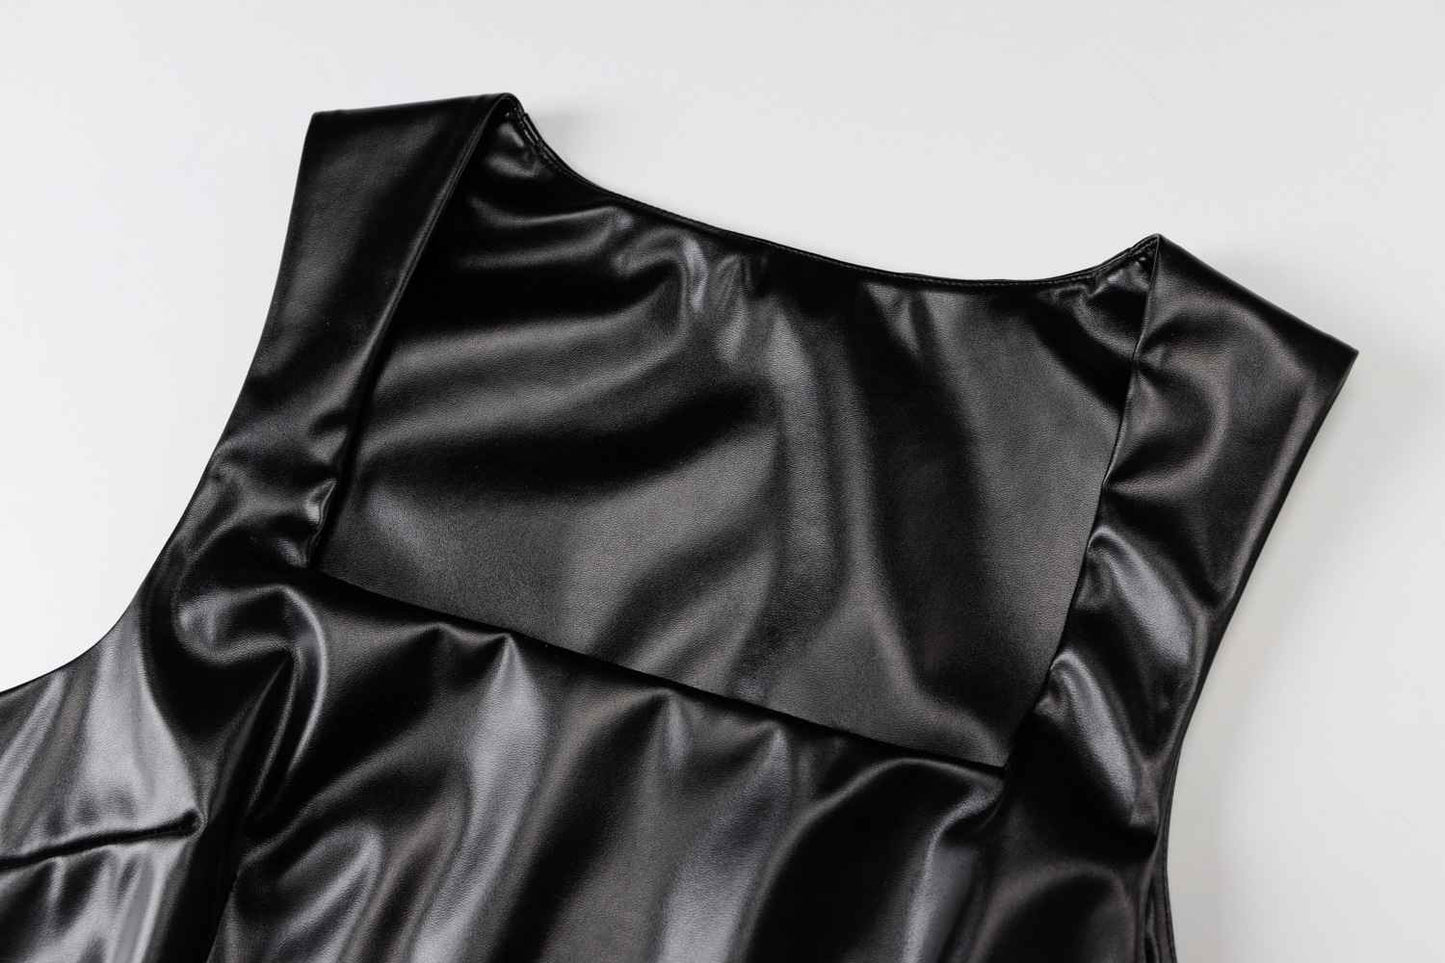 Blackpink Lisa Inspired PU Leather Square Collar Slim Dress